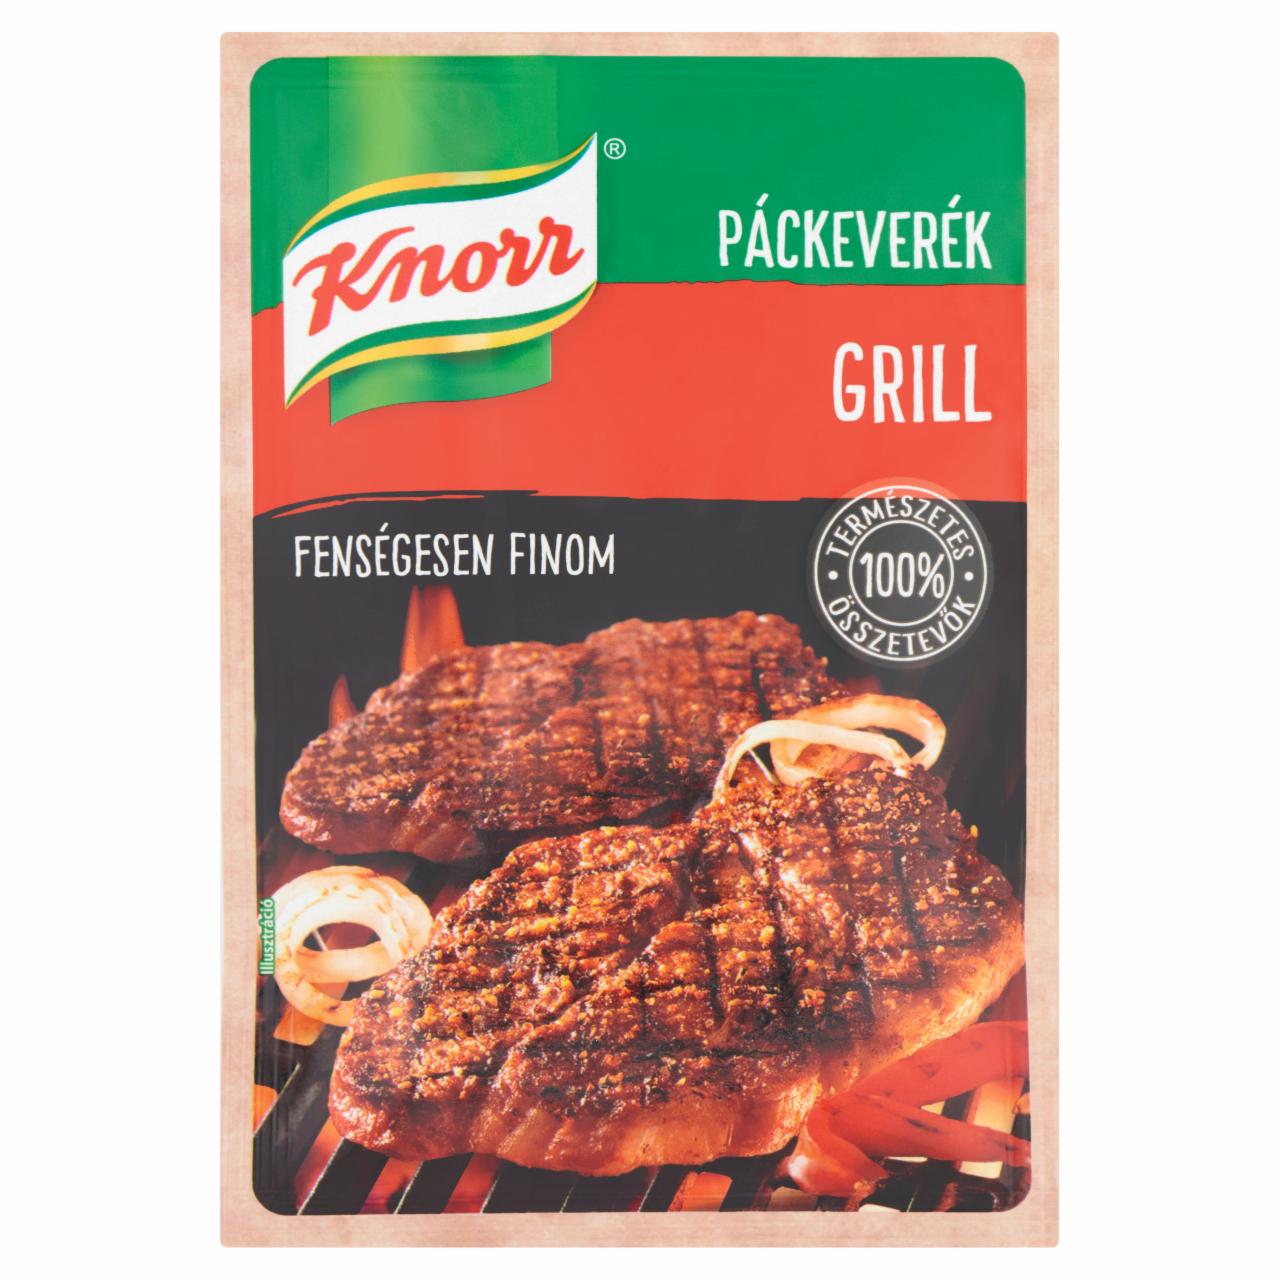 Képek - Knorr grill páckeverék 35 g